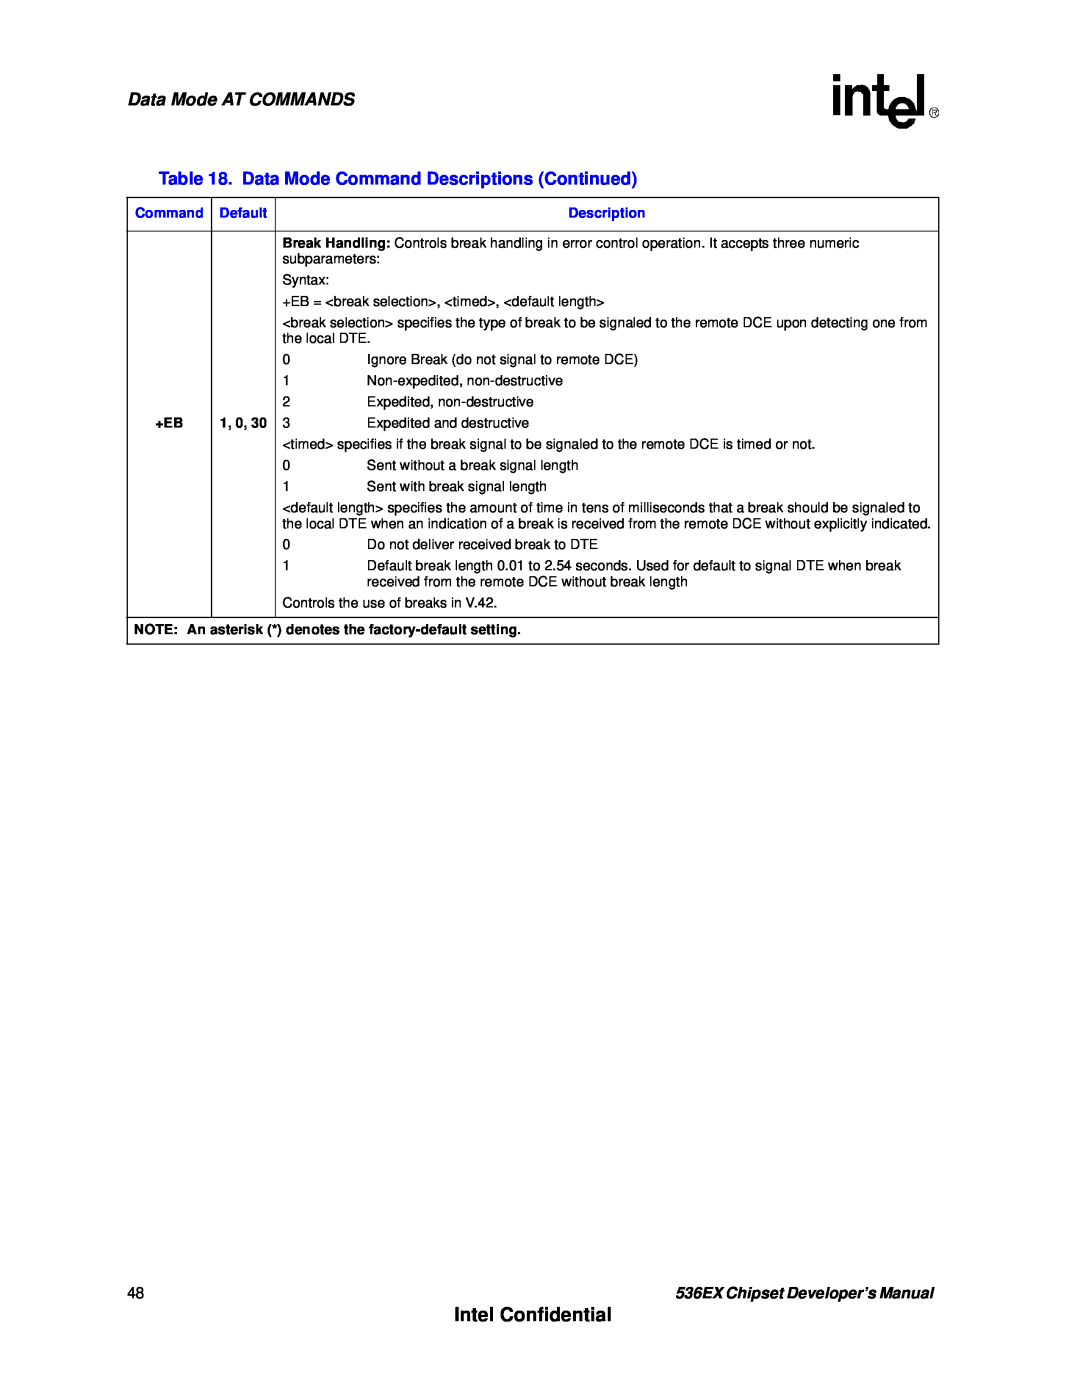 Intel 537EX manual Intel Confidential, Data Mode AT COMMANDS, 1, 0, 536EX Chipset Developer’s Manual 